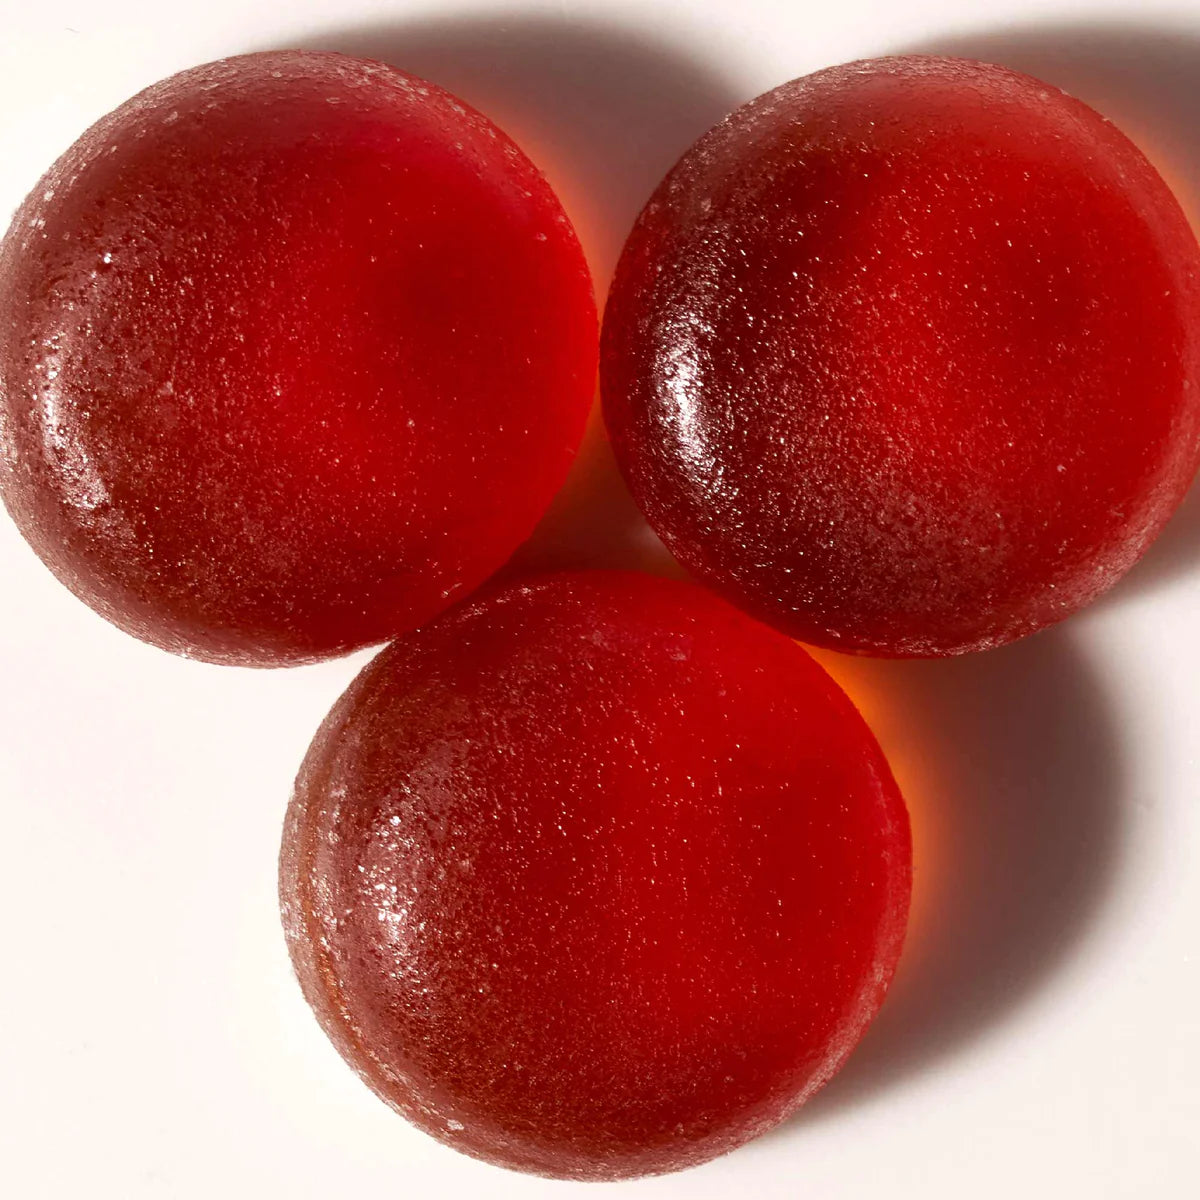 Kasugai Strawberry Gummy 🇯🇵